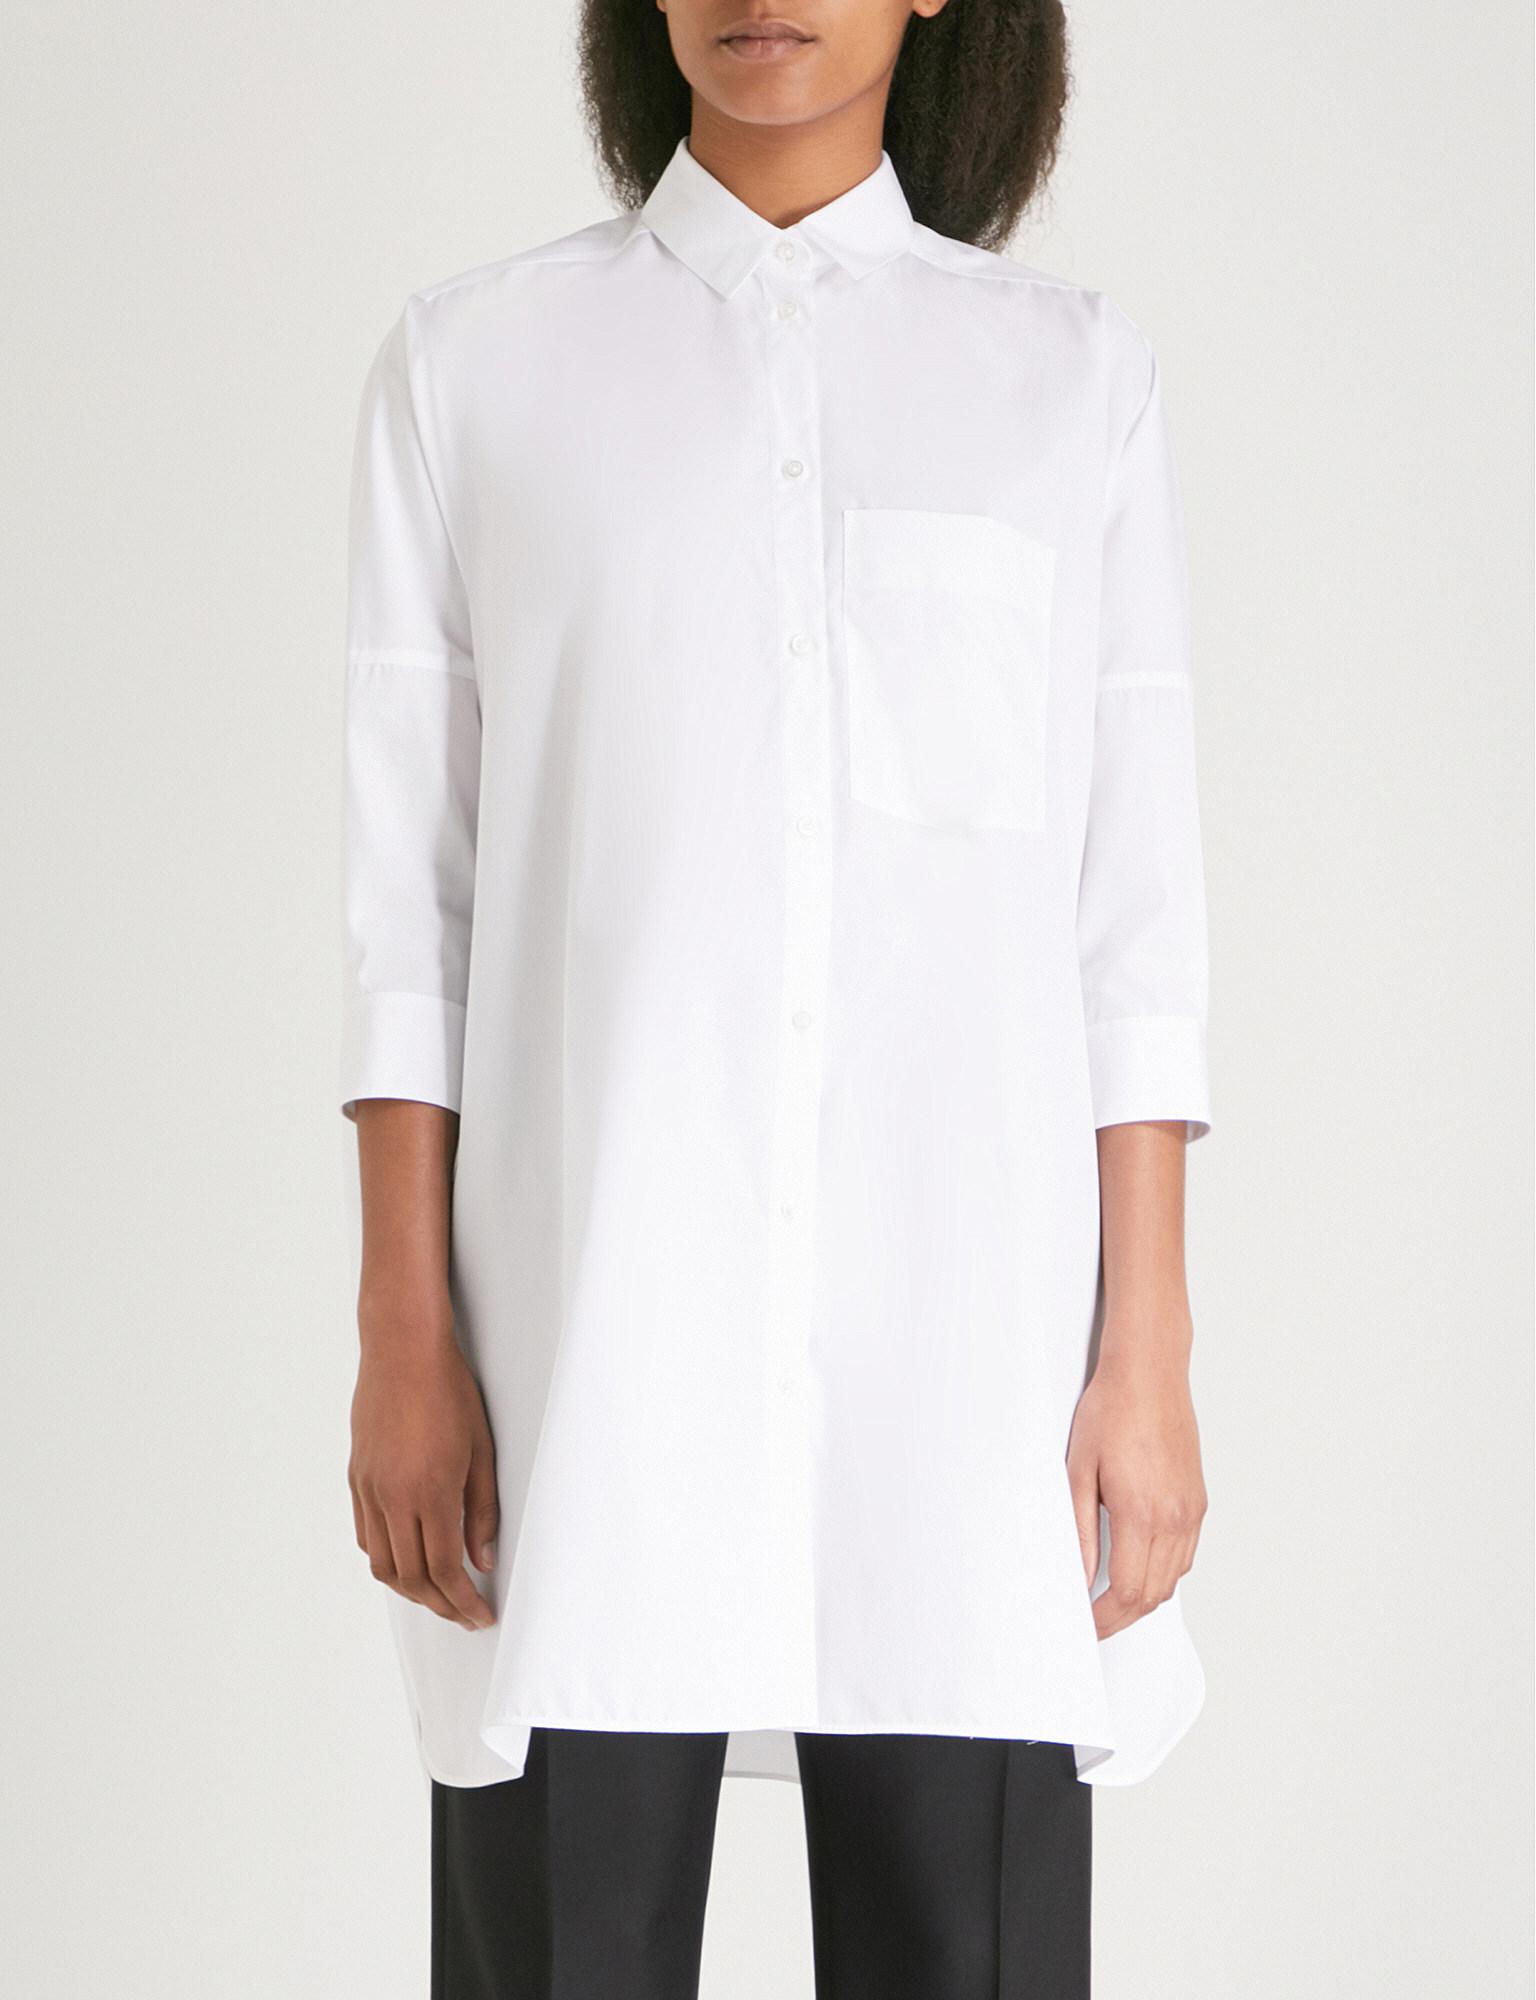 Jil Sander Sunday Cotton Shirt in White - Lyst